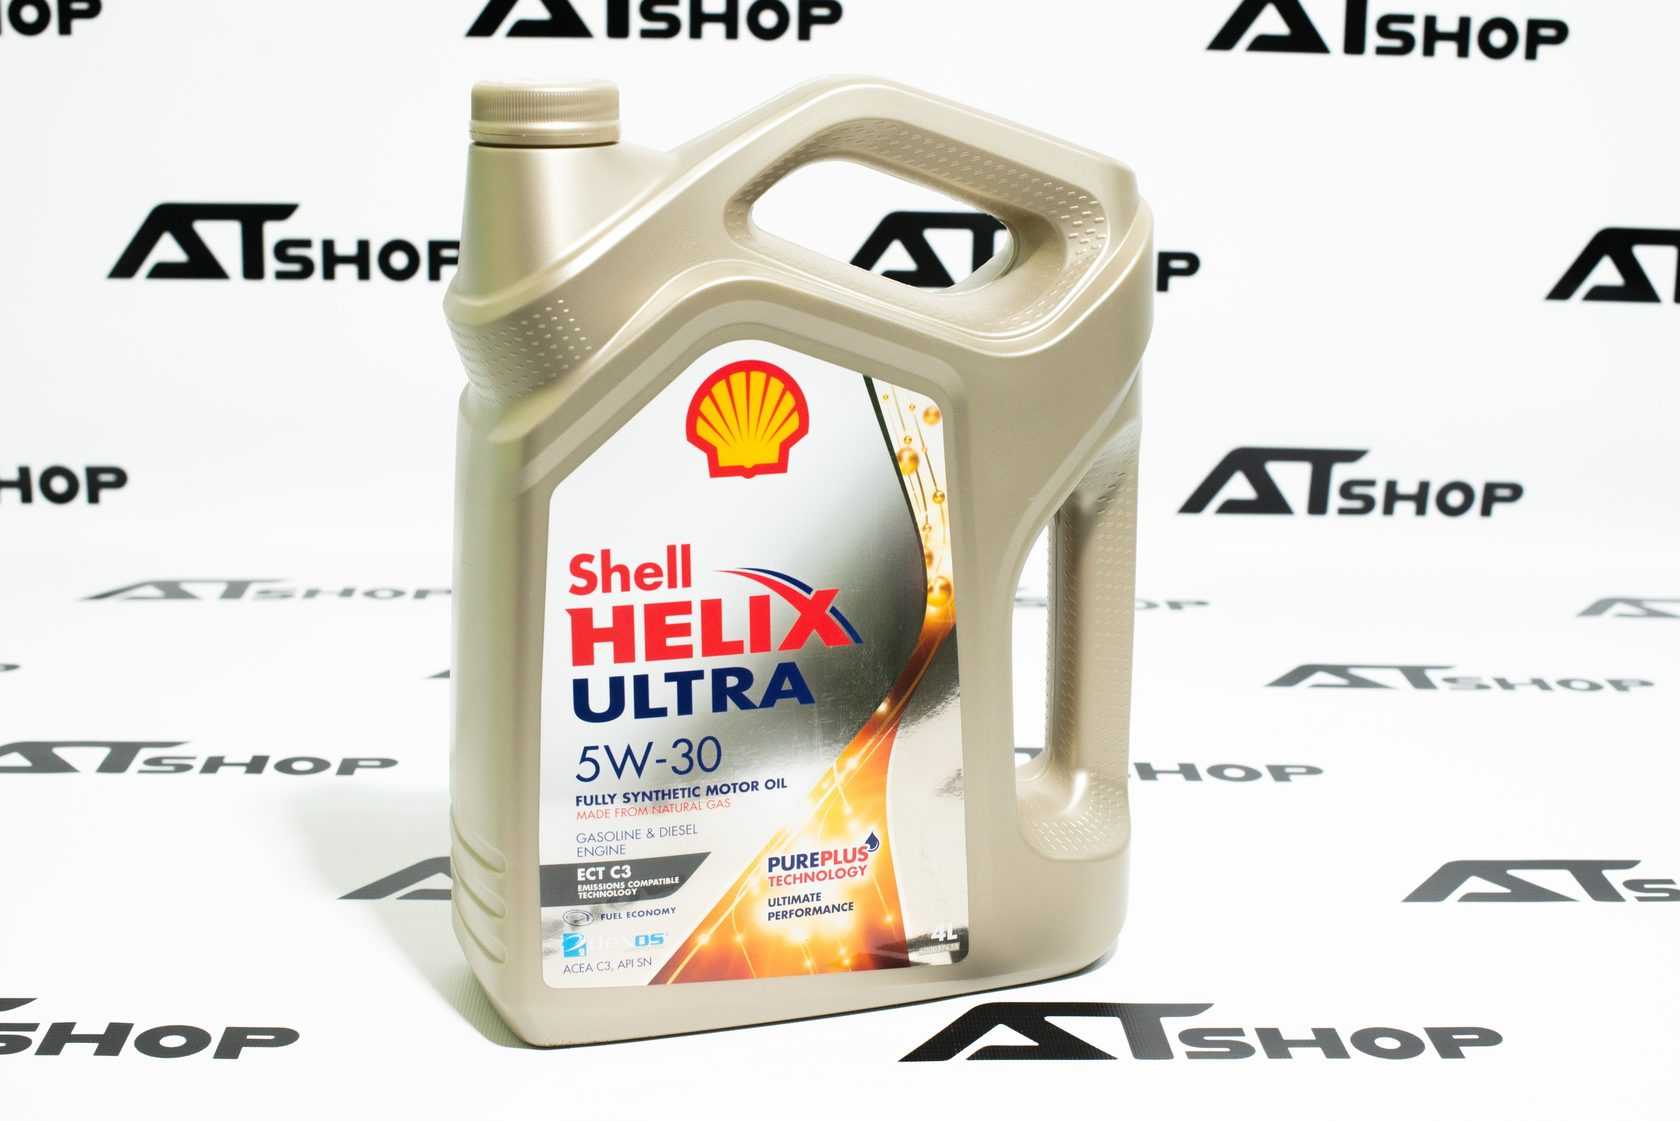 Shell 5w40: характеристики масла шелл хеликс 5w40, как отличить подделку, разновидности масел